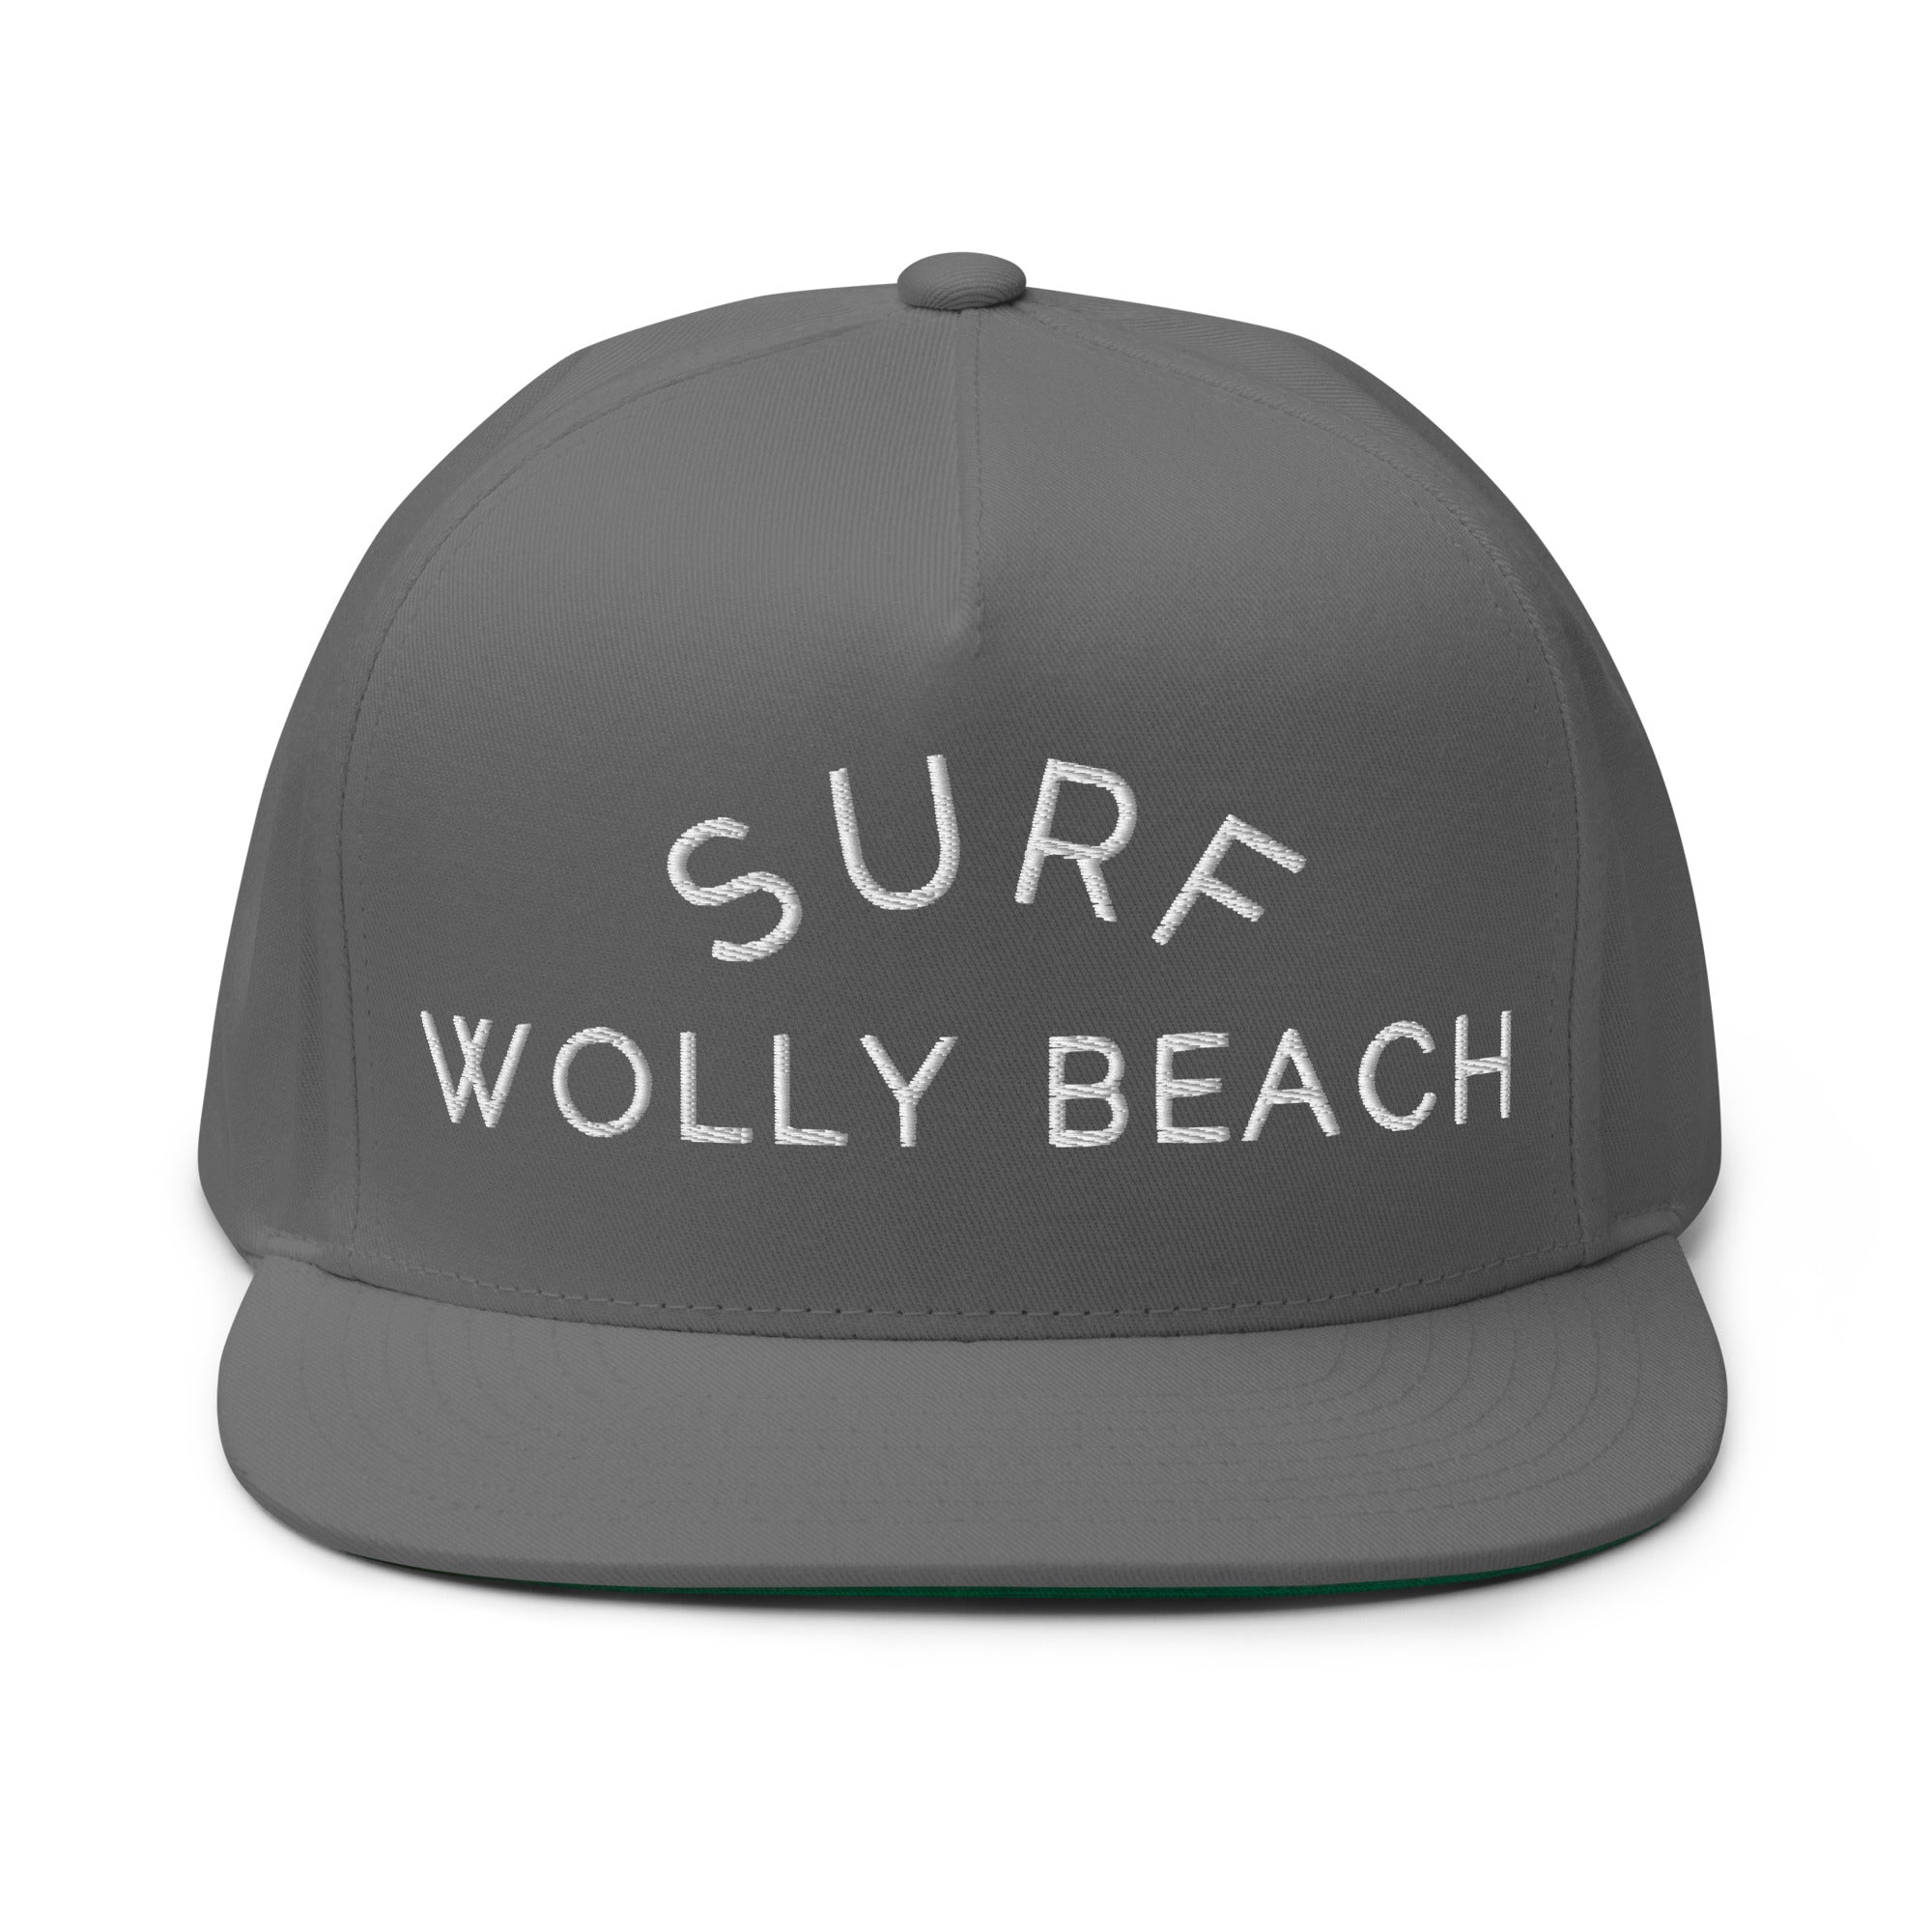 Surf Wolly Beach